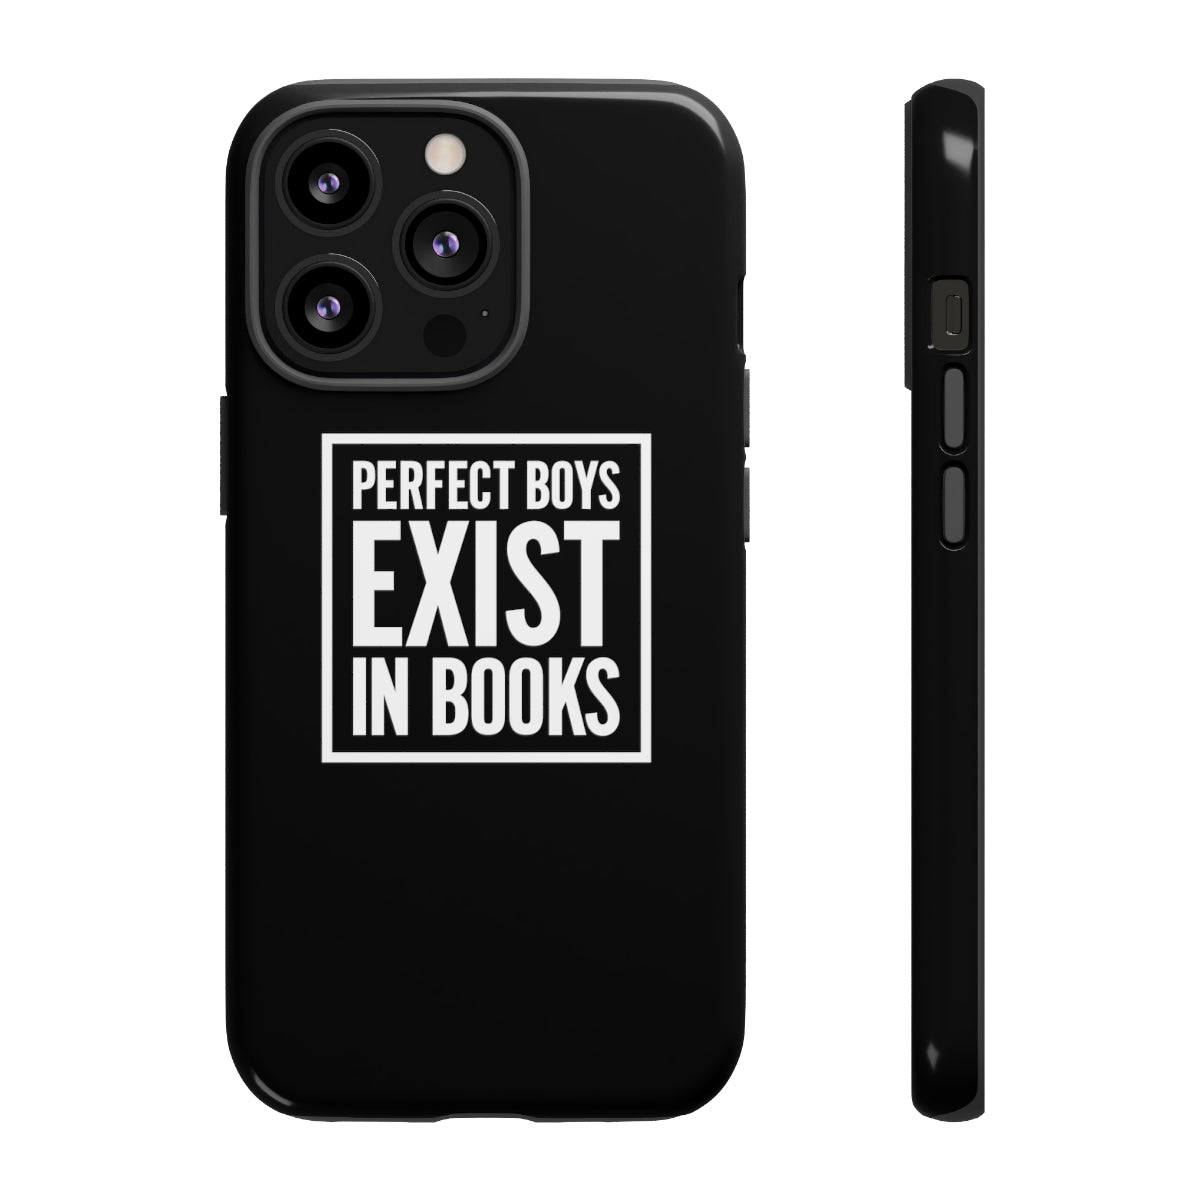 PERFECT BOYS EXIST Phone Case